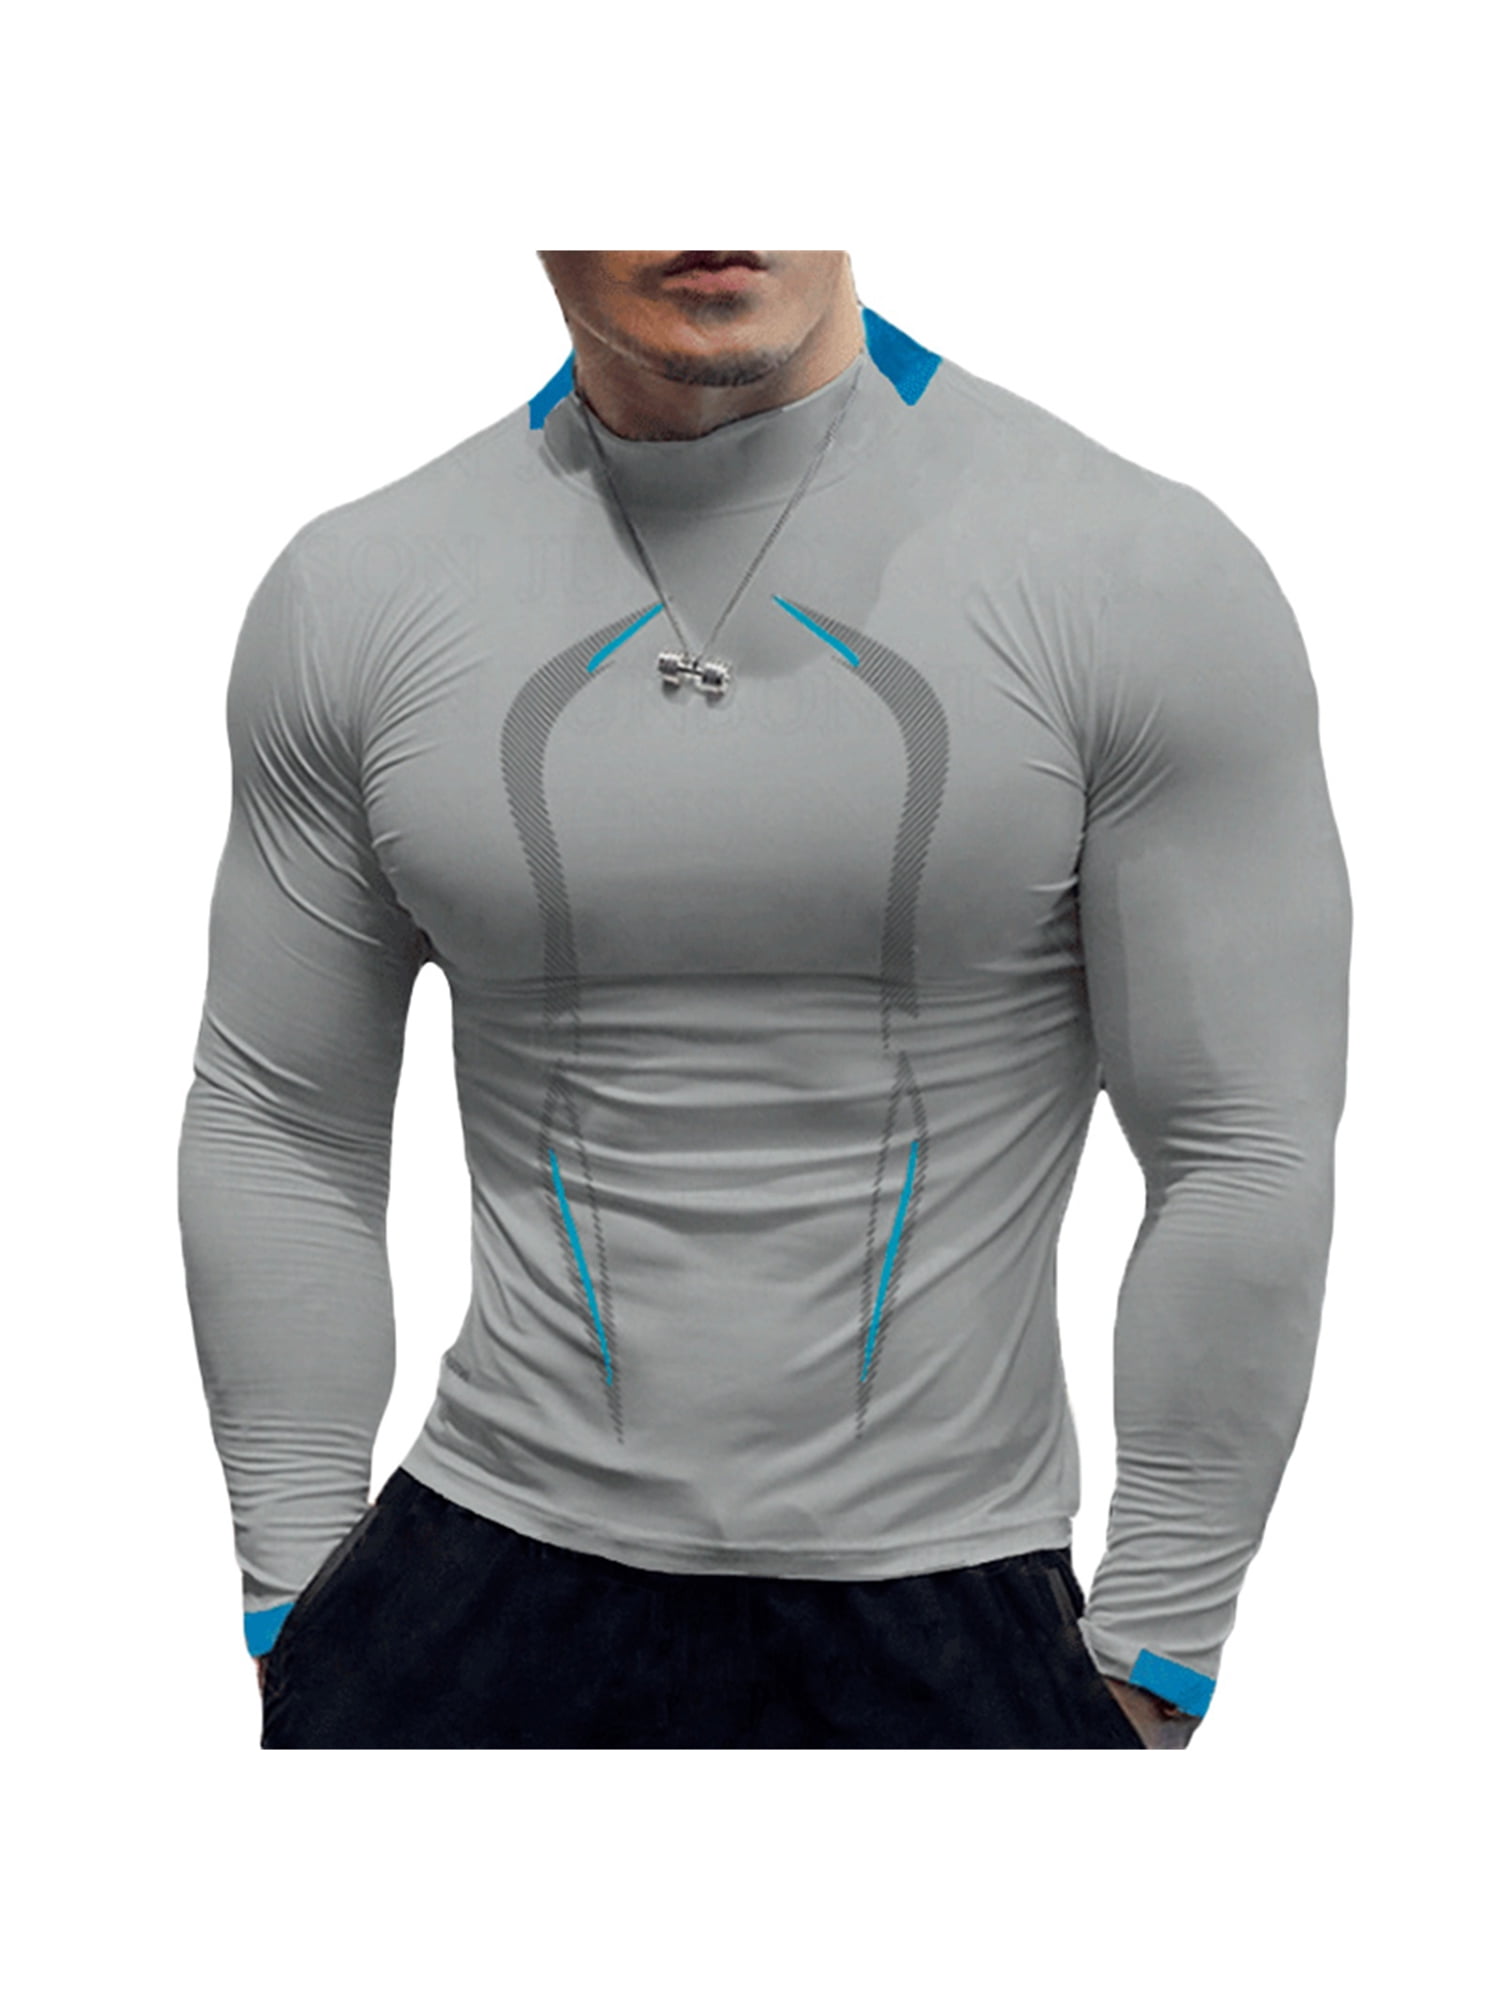 Men Sleeve T Shirts Quick Drying Tops Athletic Workout Fitness Running Shirt Rash Guard - Walmart.com